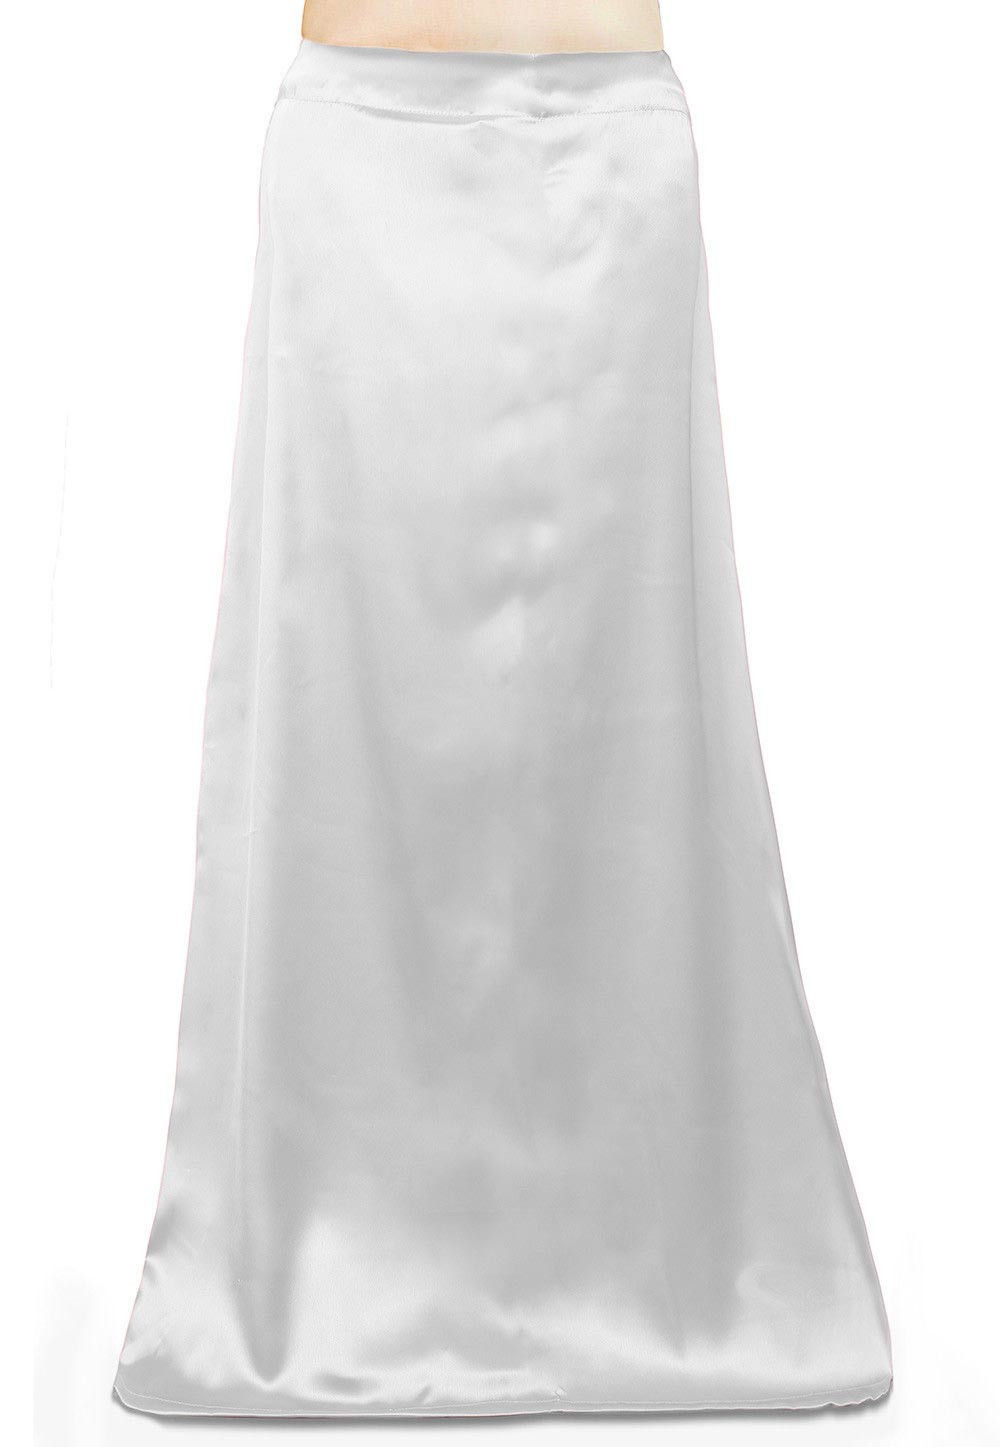 Solid Color Satin Petticoat in White : UUX503